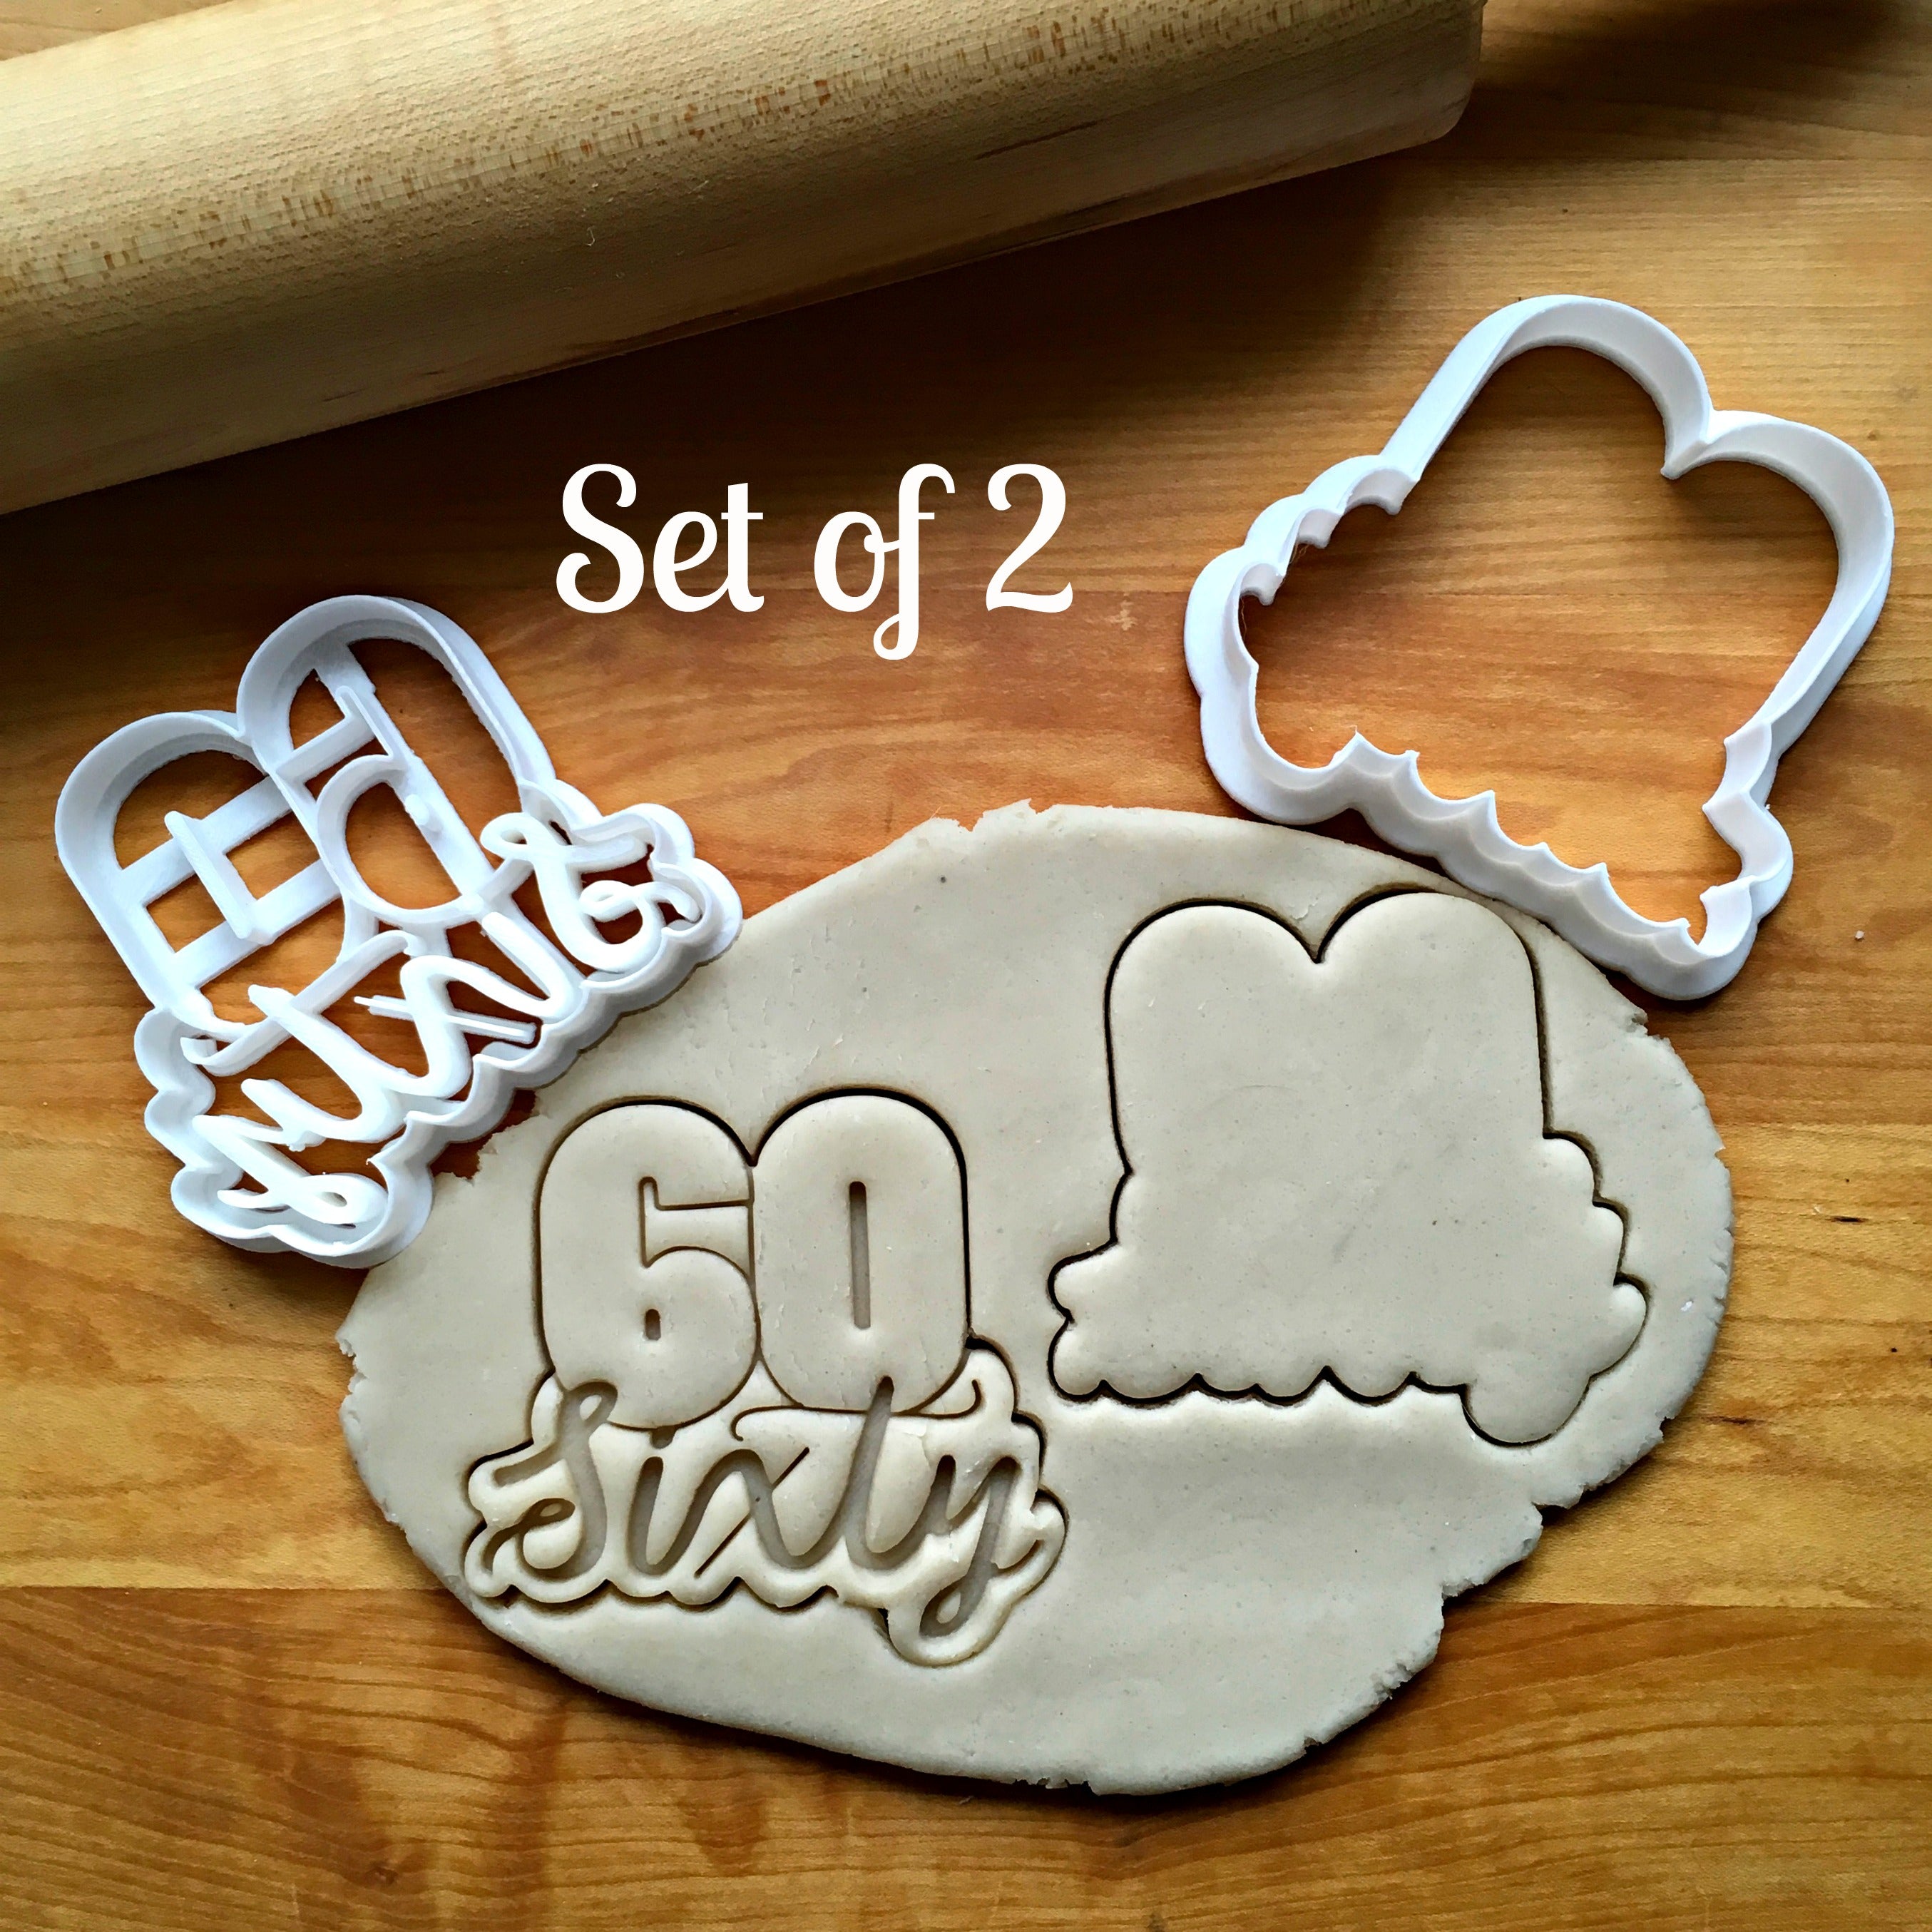 Set of 2 Lettered Number 60 Cookie Cutters/Dishwasher Safe